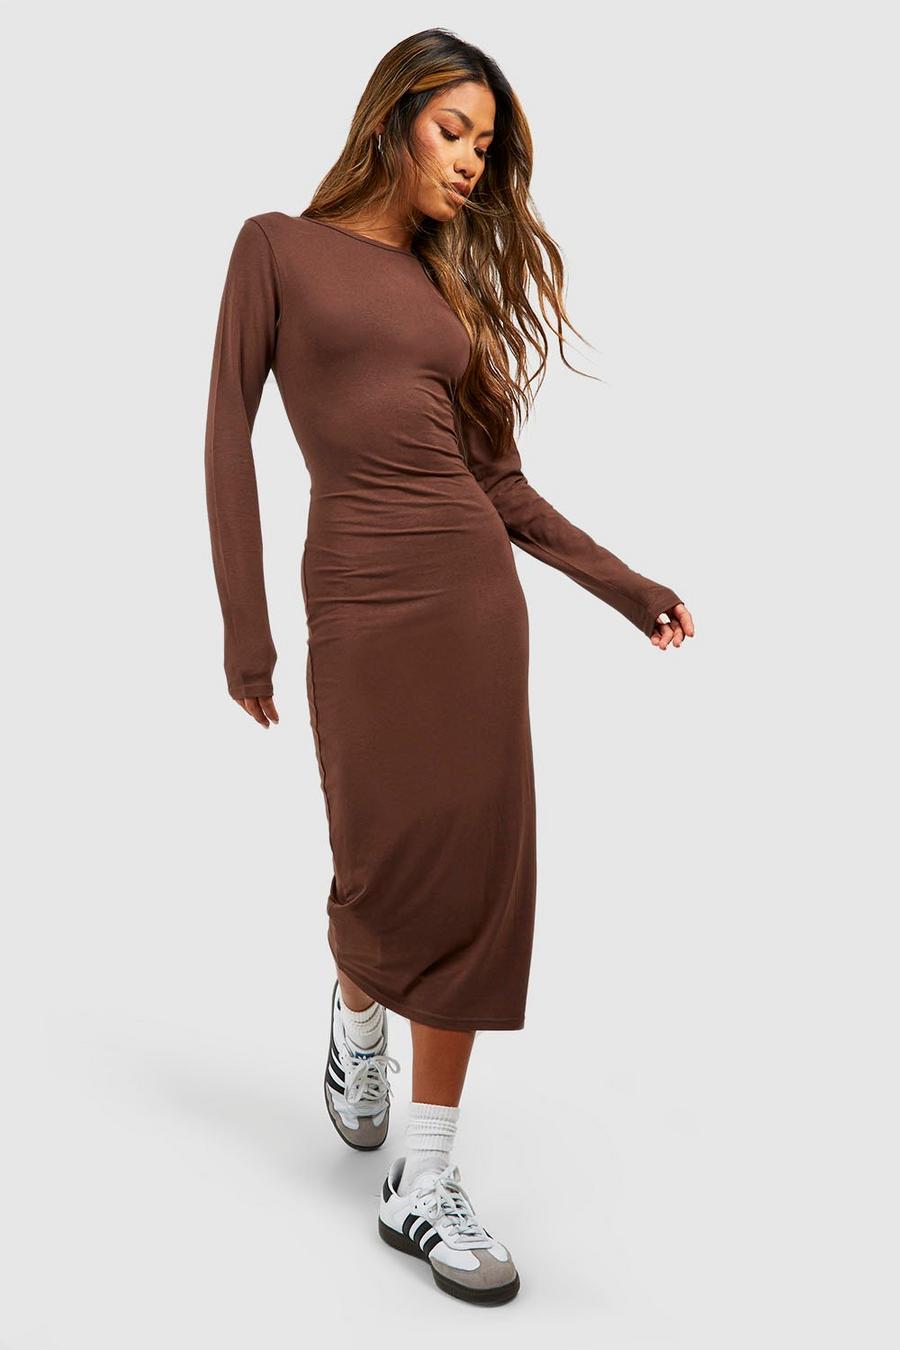 https://media.boohoo.com/i/boohoo/gzz69757_chocolate_xl/female-chocolate-premium-super-soft-midaxi-dress/?w=900&qlt=default&fmt.jp2.qlt=70&fmt=auto&sm=fit